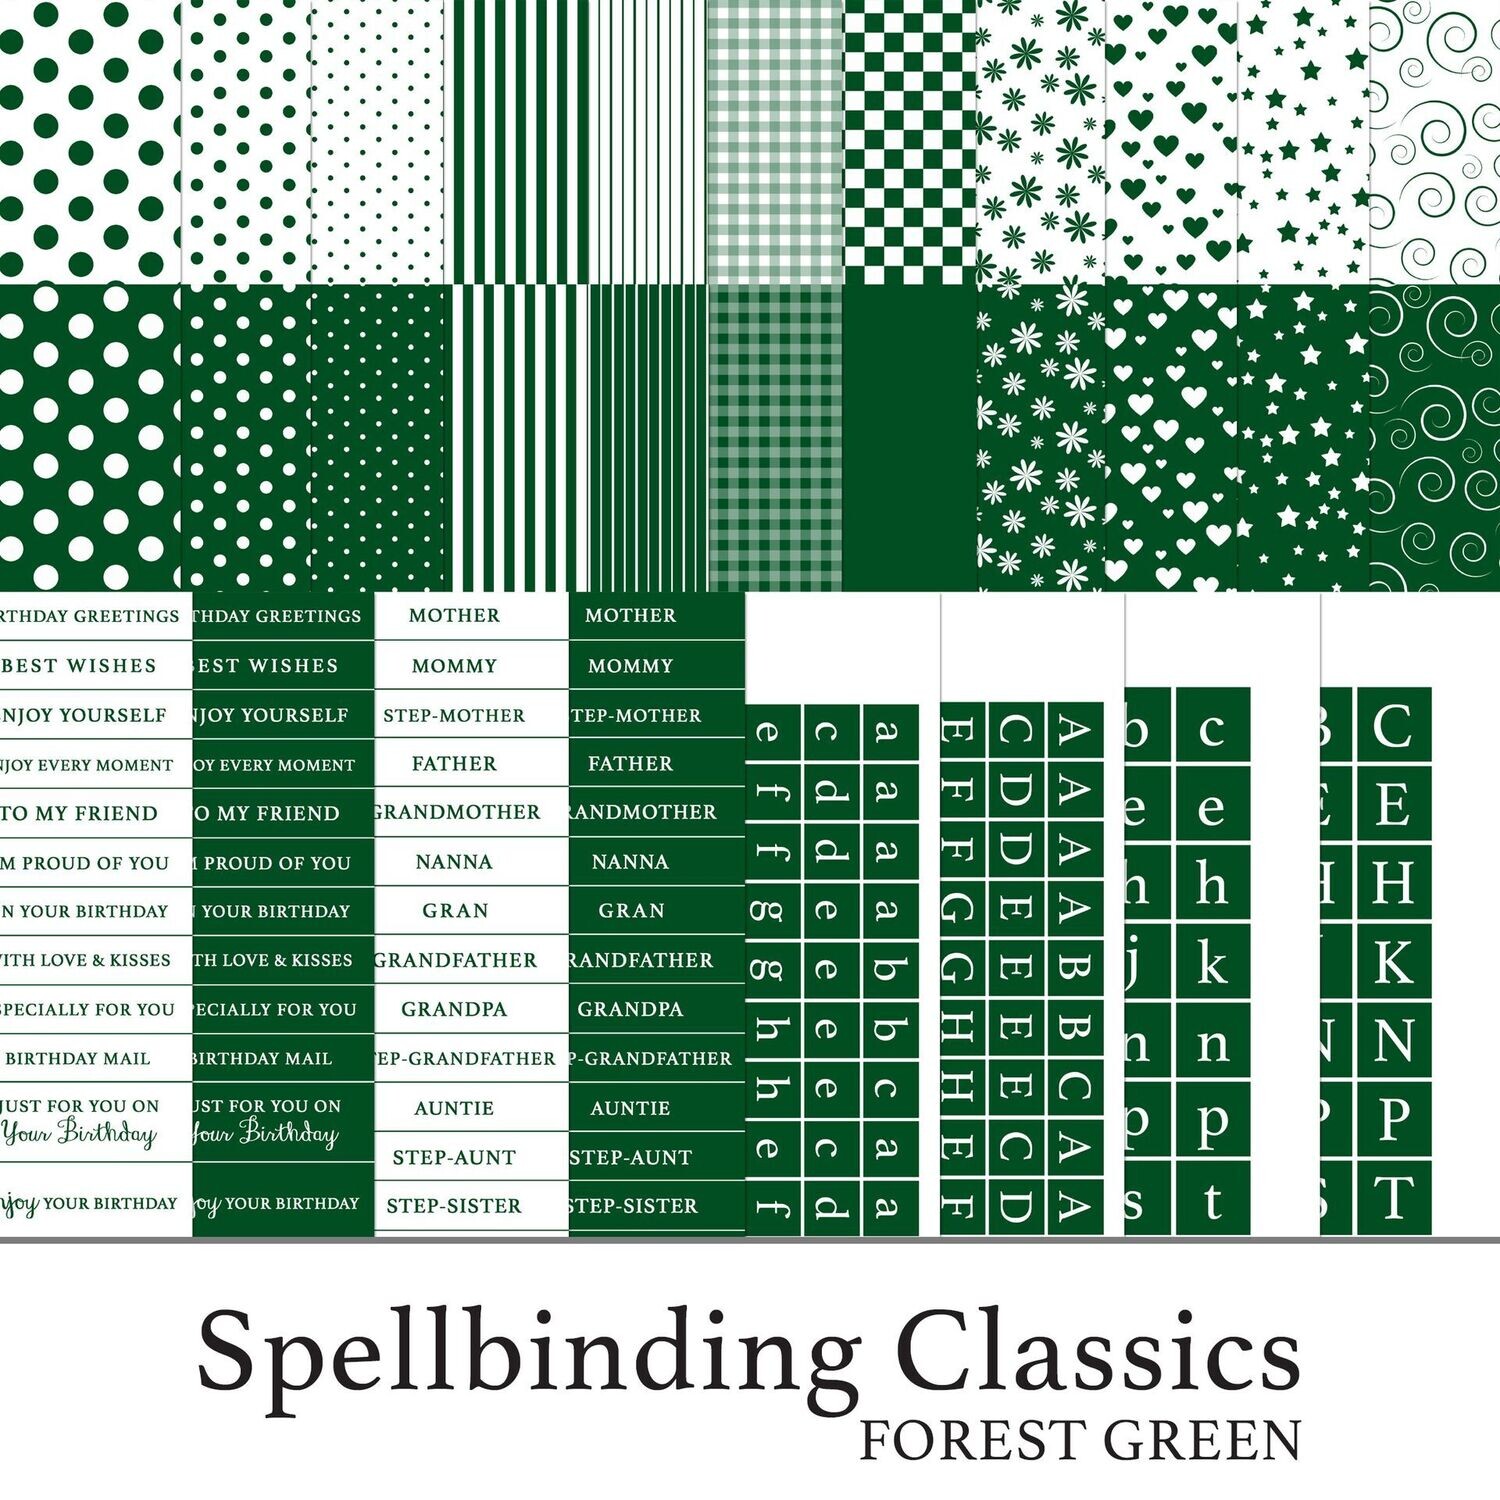 Spellbinding Classics Greens Forest Green Digital Kit